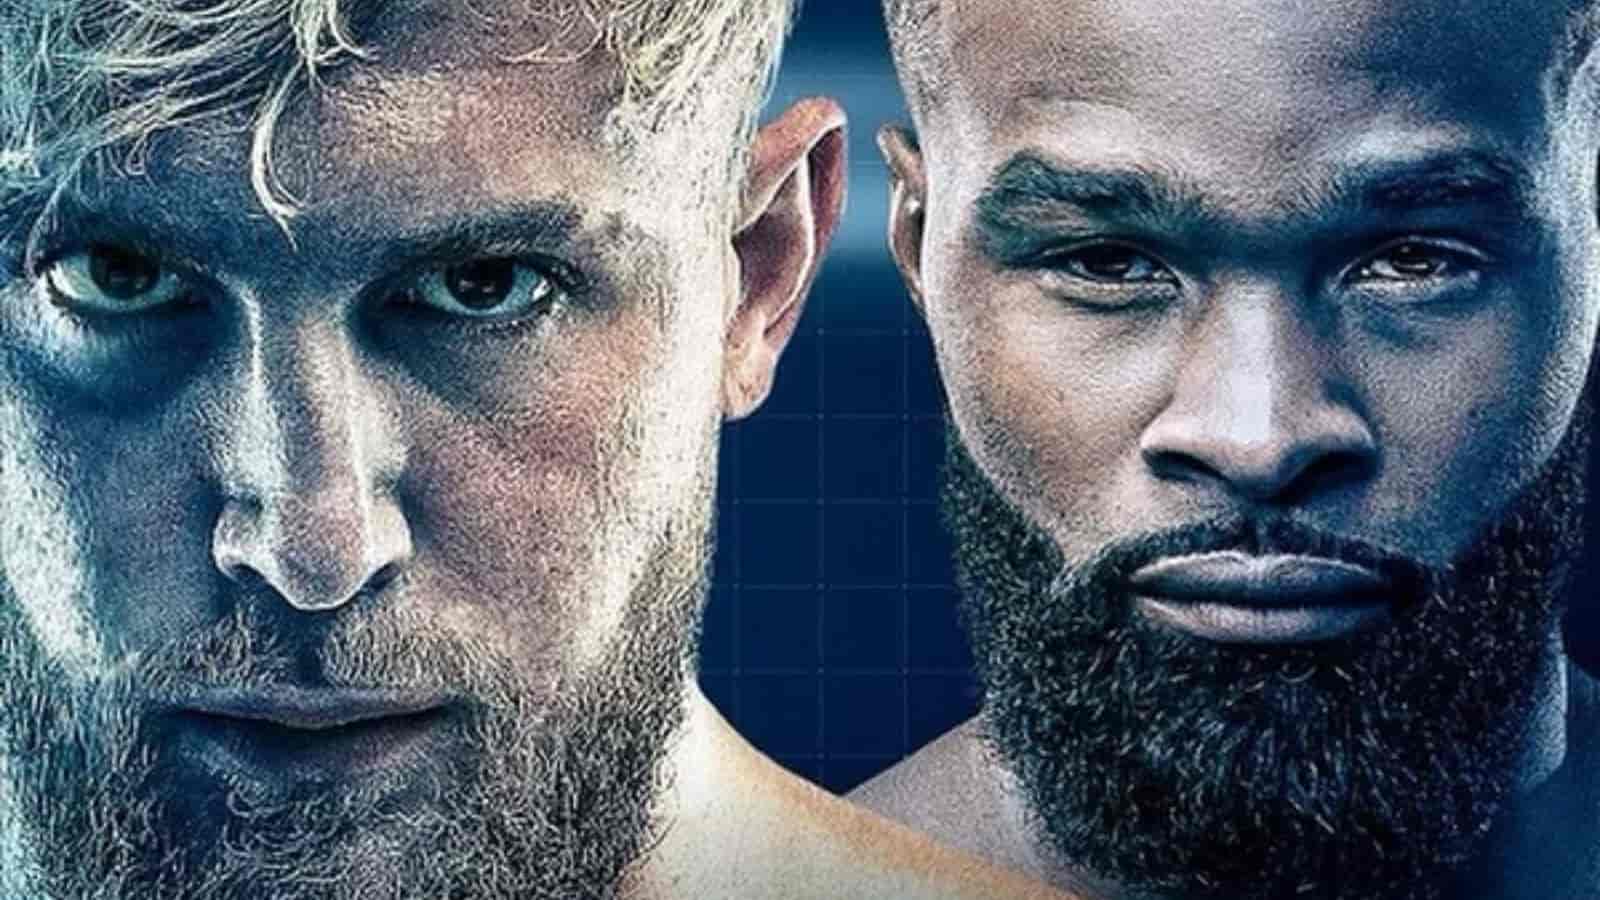 Watch Jake Paul vs Tyron Woodley Free Live Boxing Streams Reddit